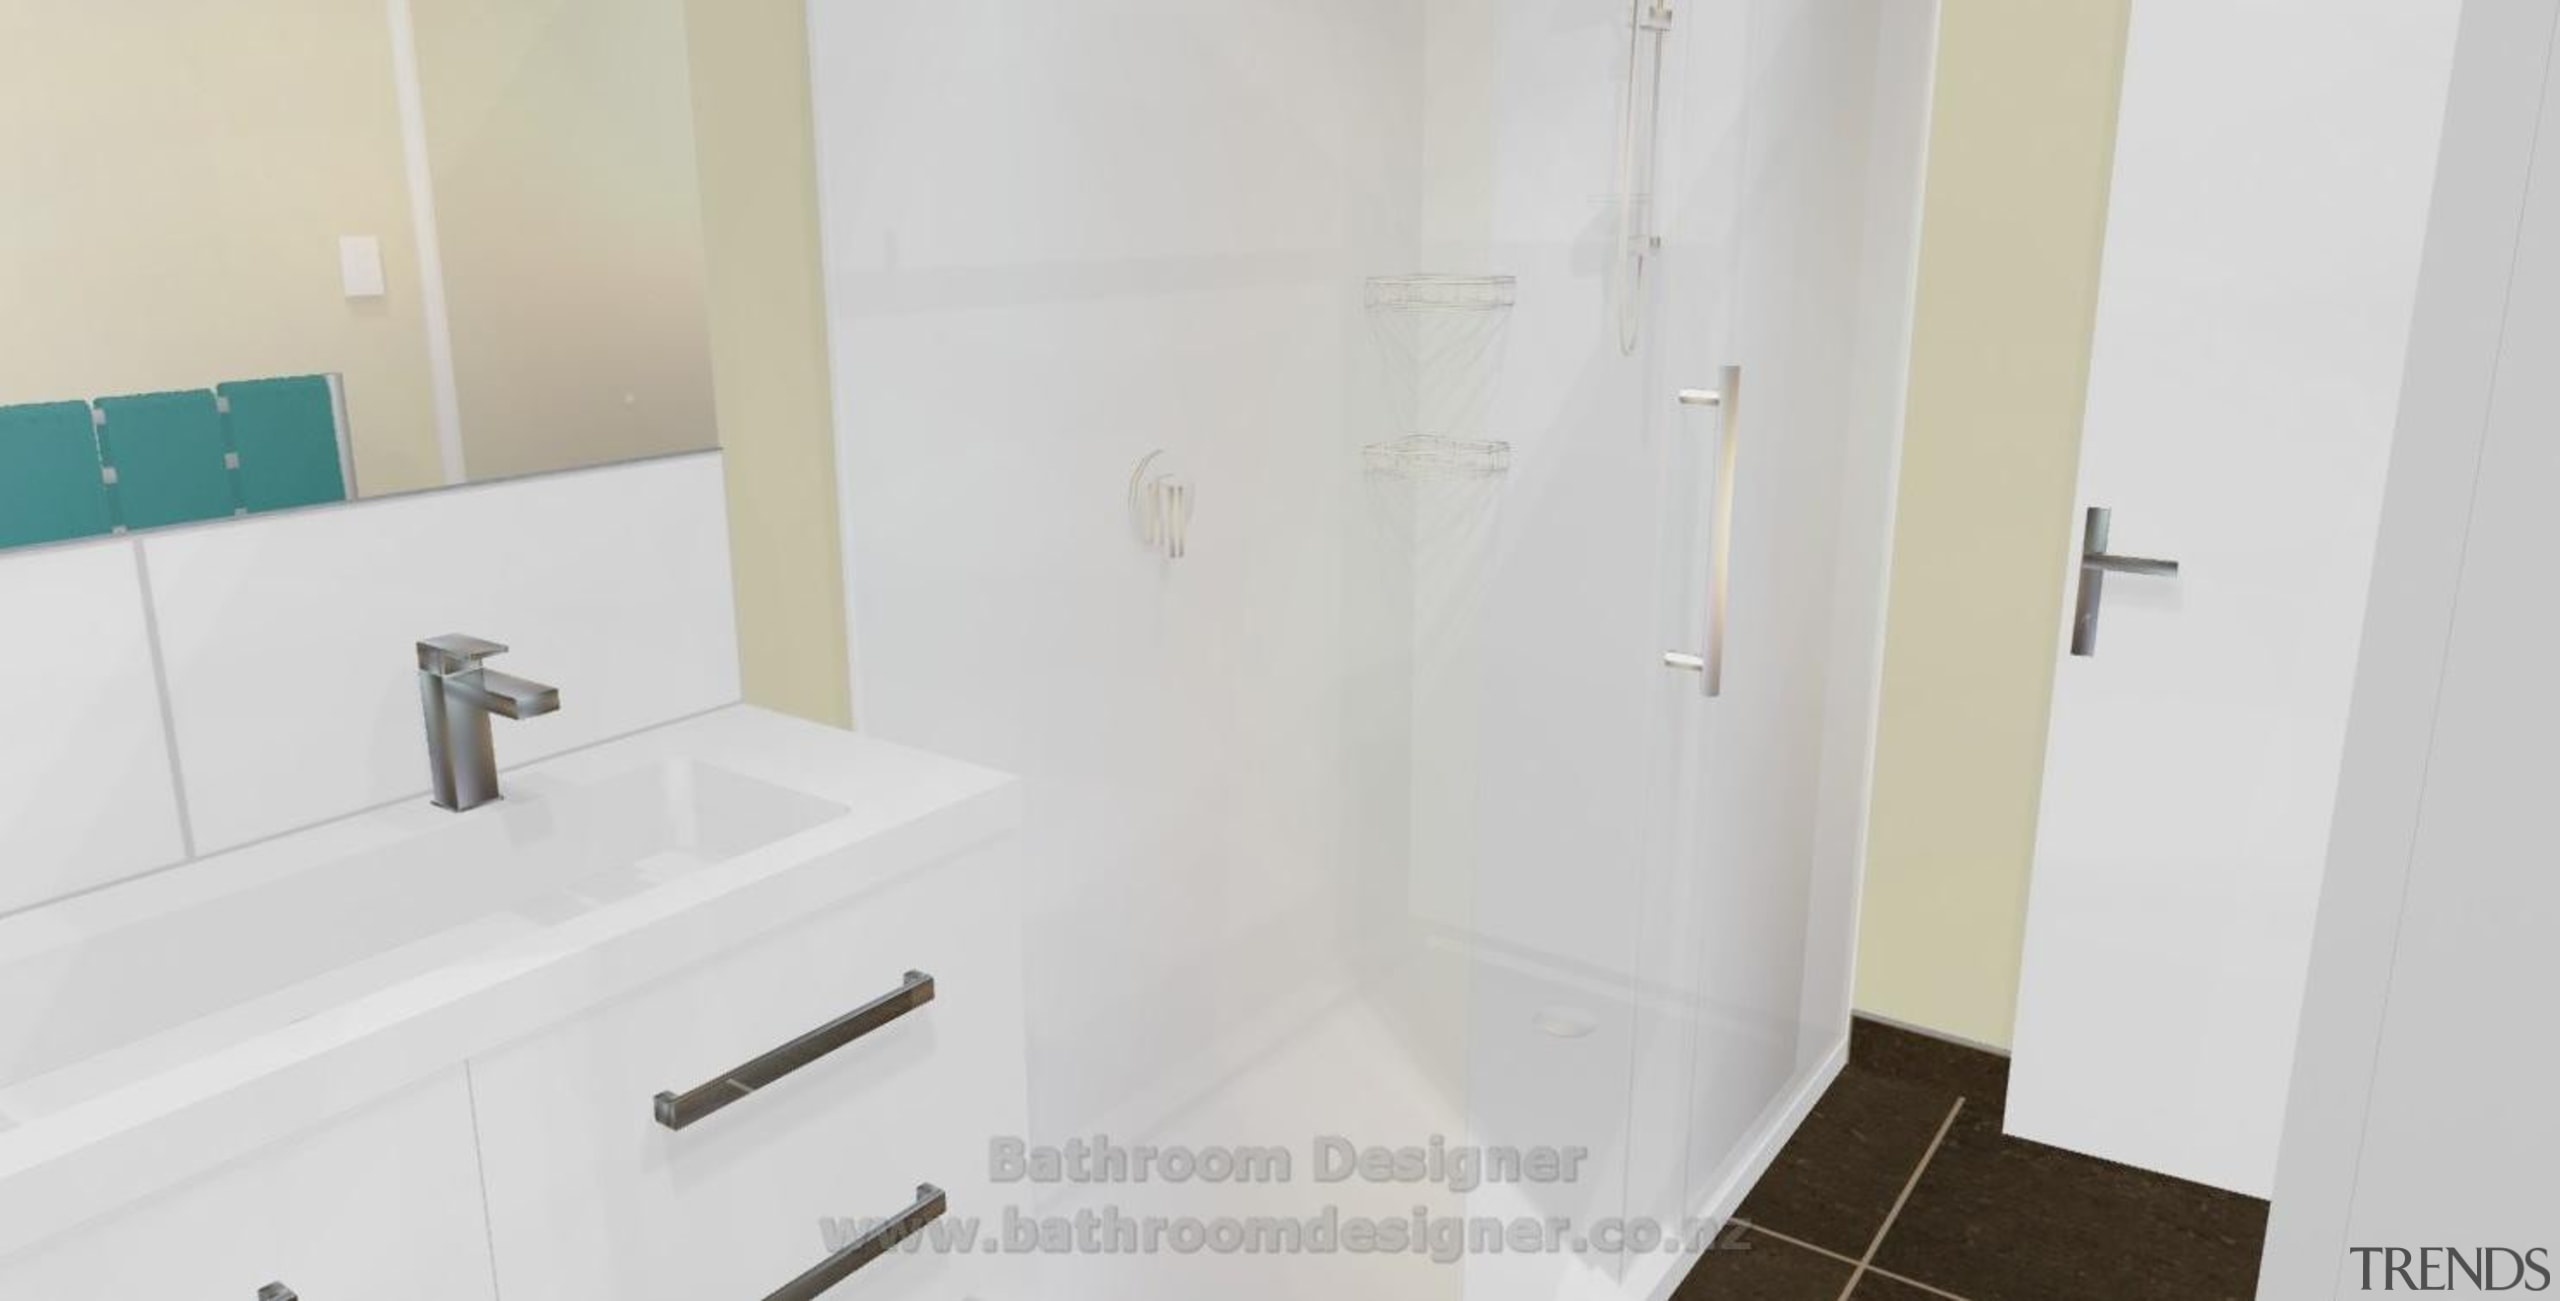 Bathroom Designer. The same layout as the Tiled bathroom, floor, plumbing fixture, property, room, wall, white